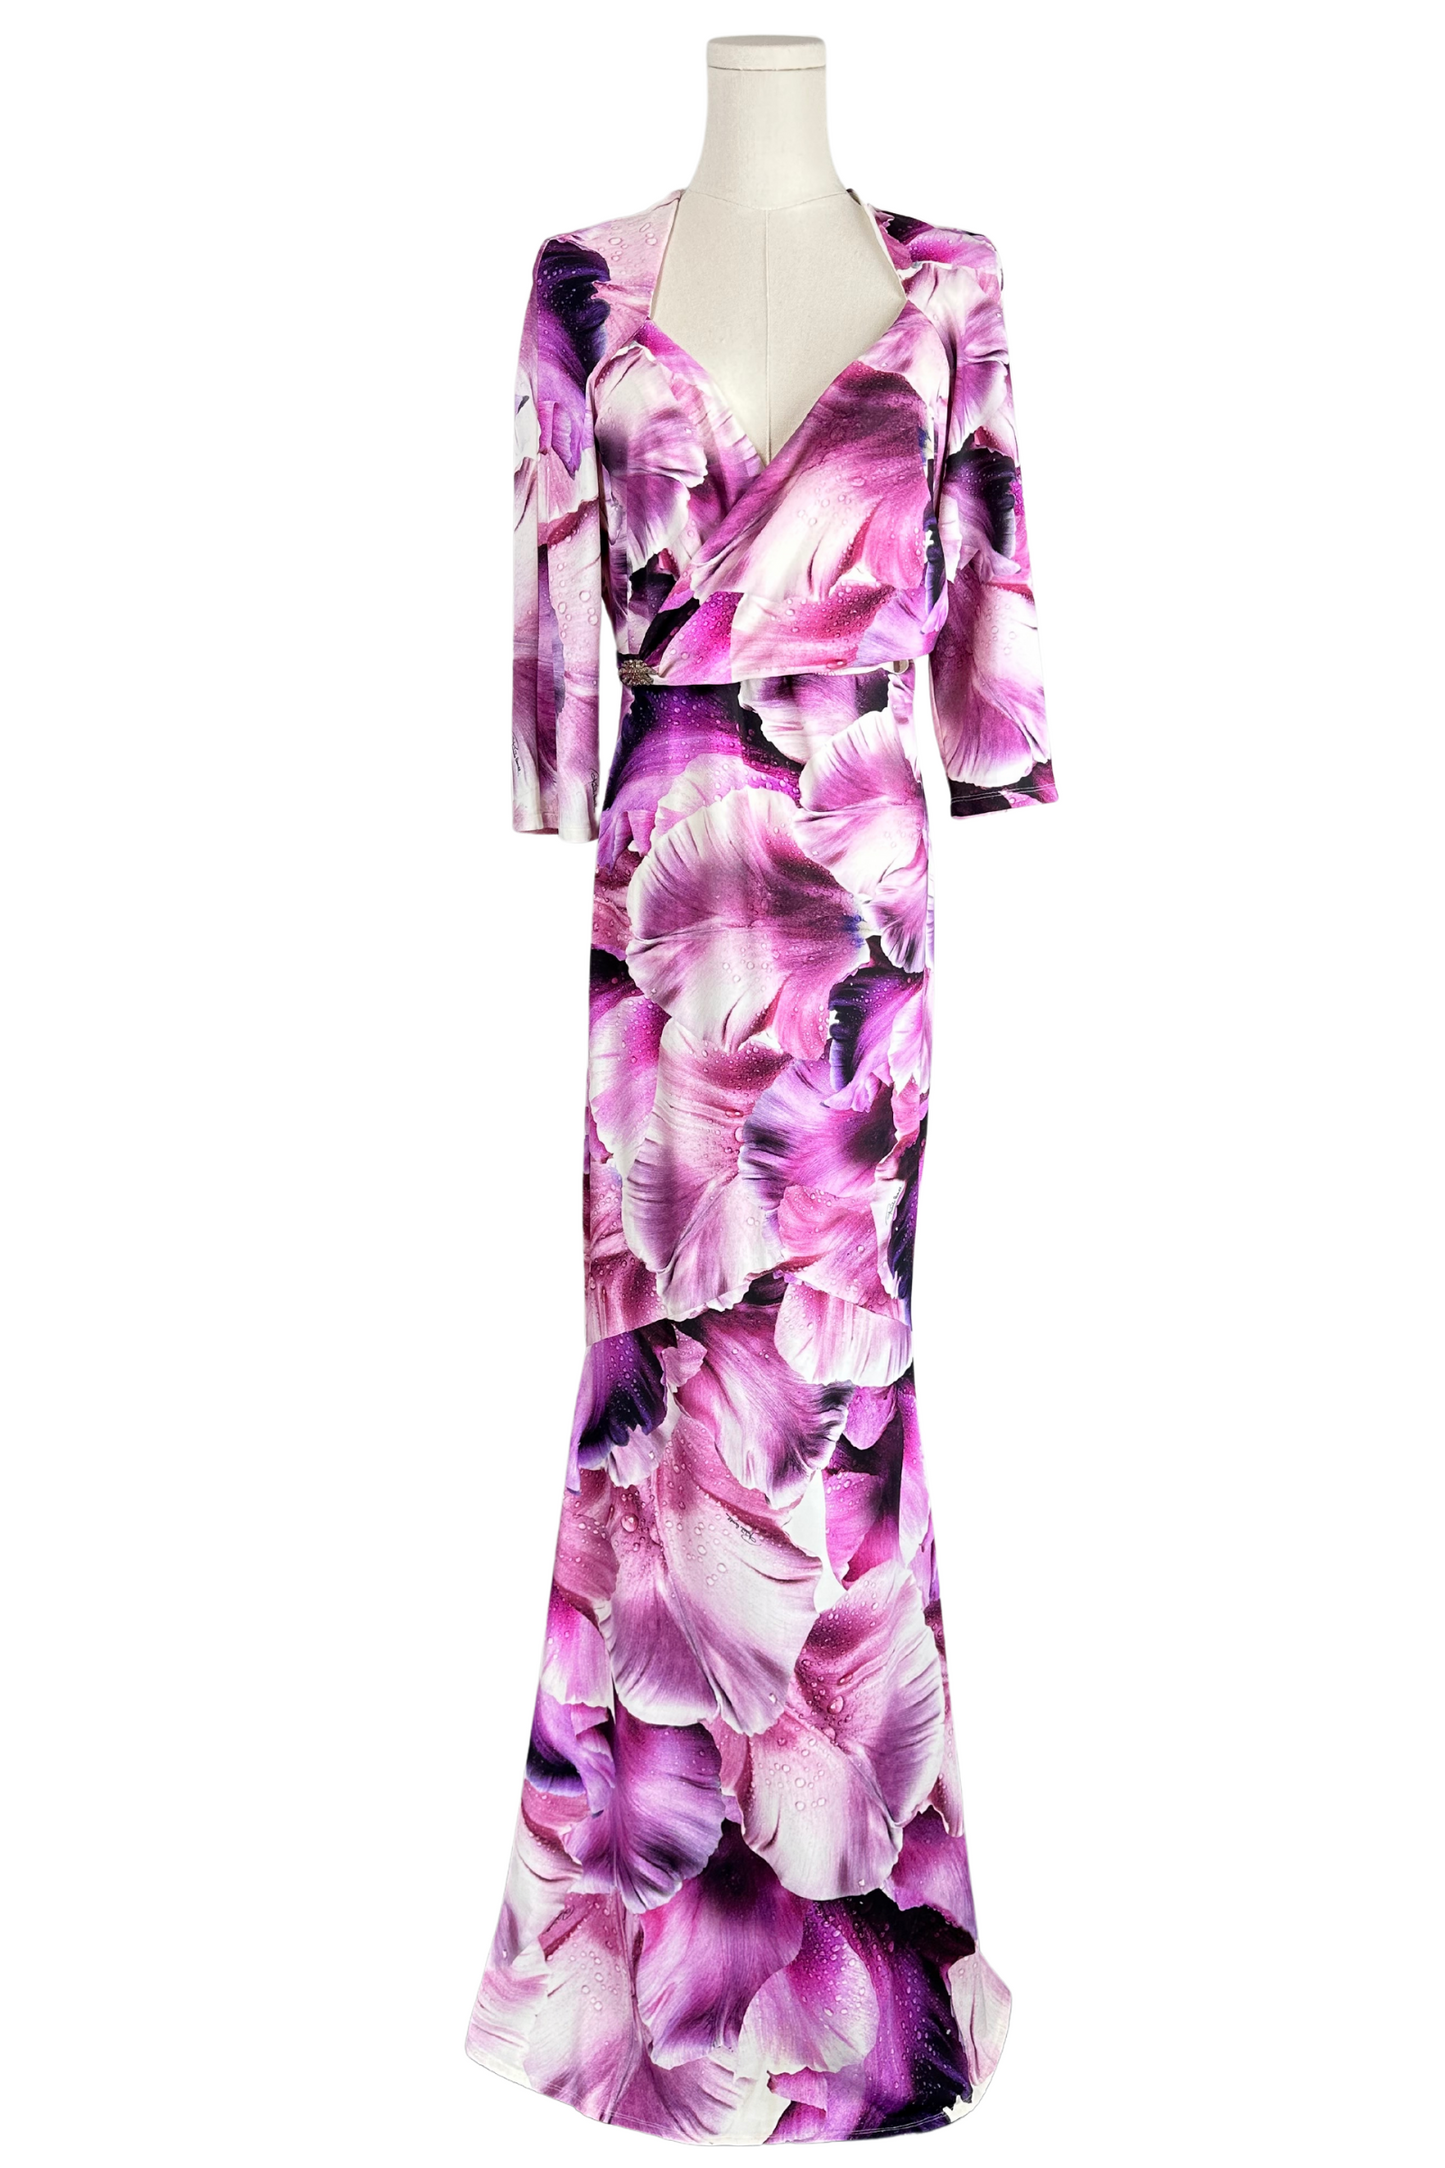 Roberto Cavalli Iris Print Pink Purple Dress Gown Size 48